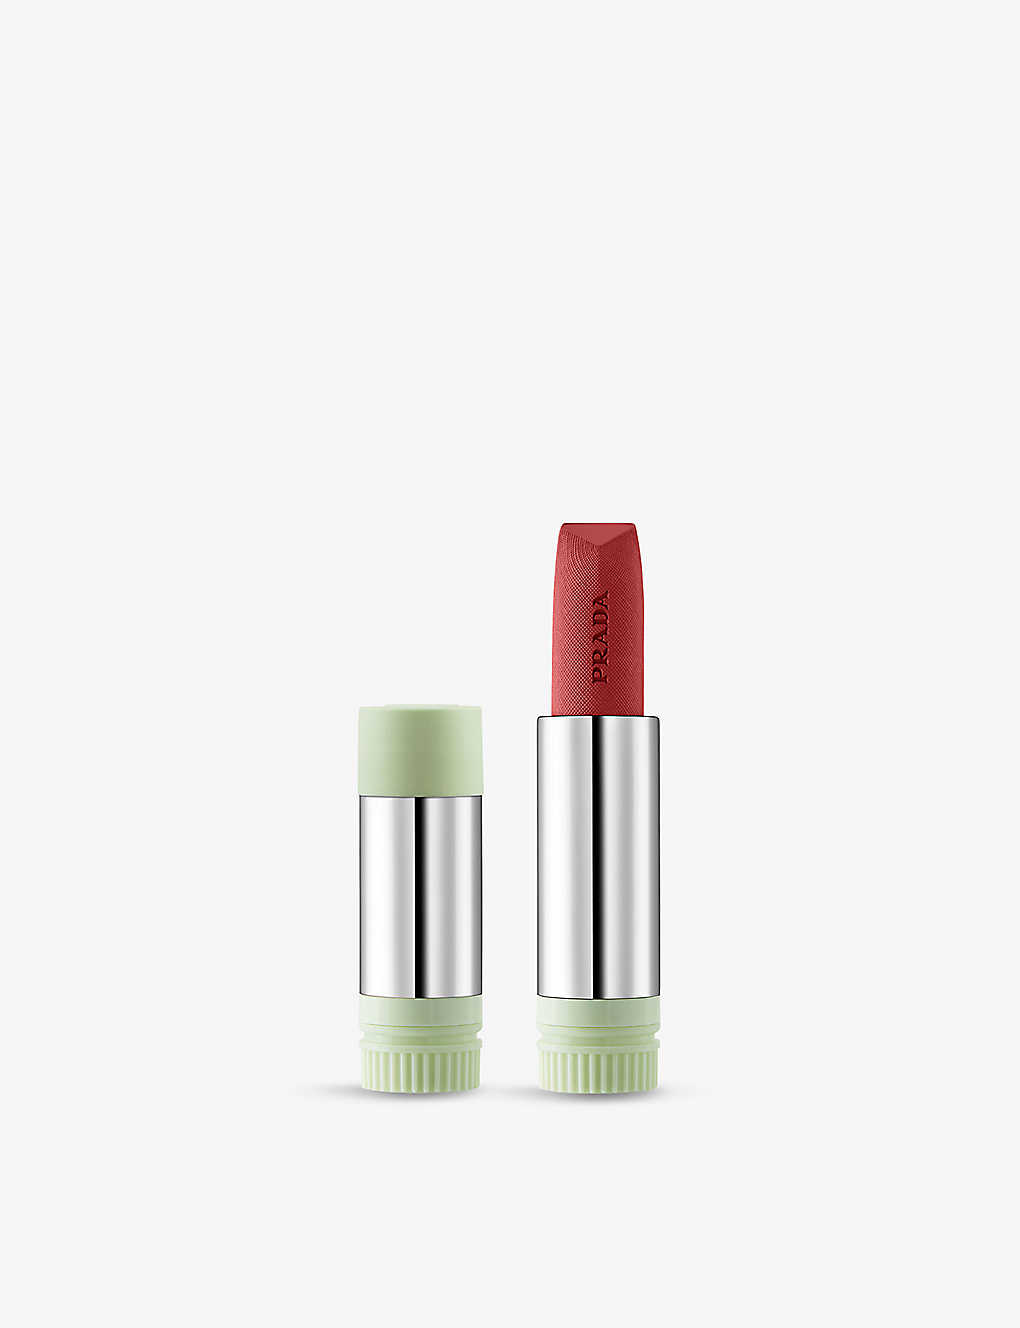 Prada Notte Hyper Matte Monochrome Lipstick Refill 3.8g